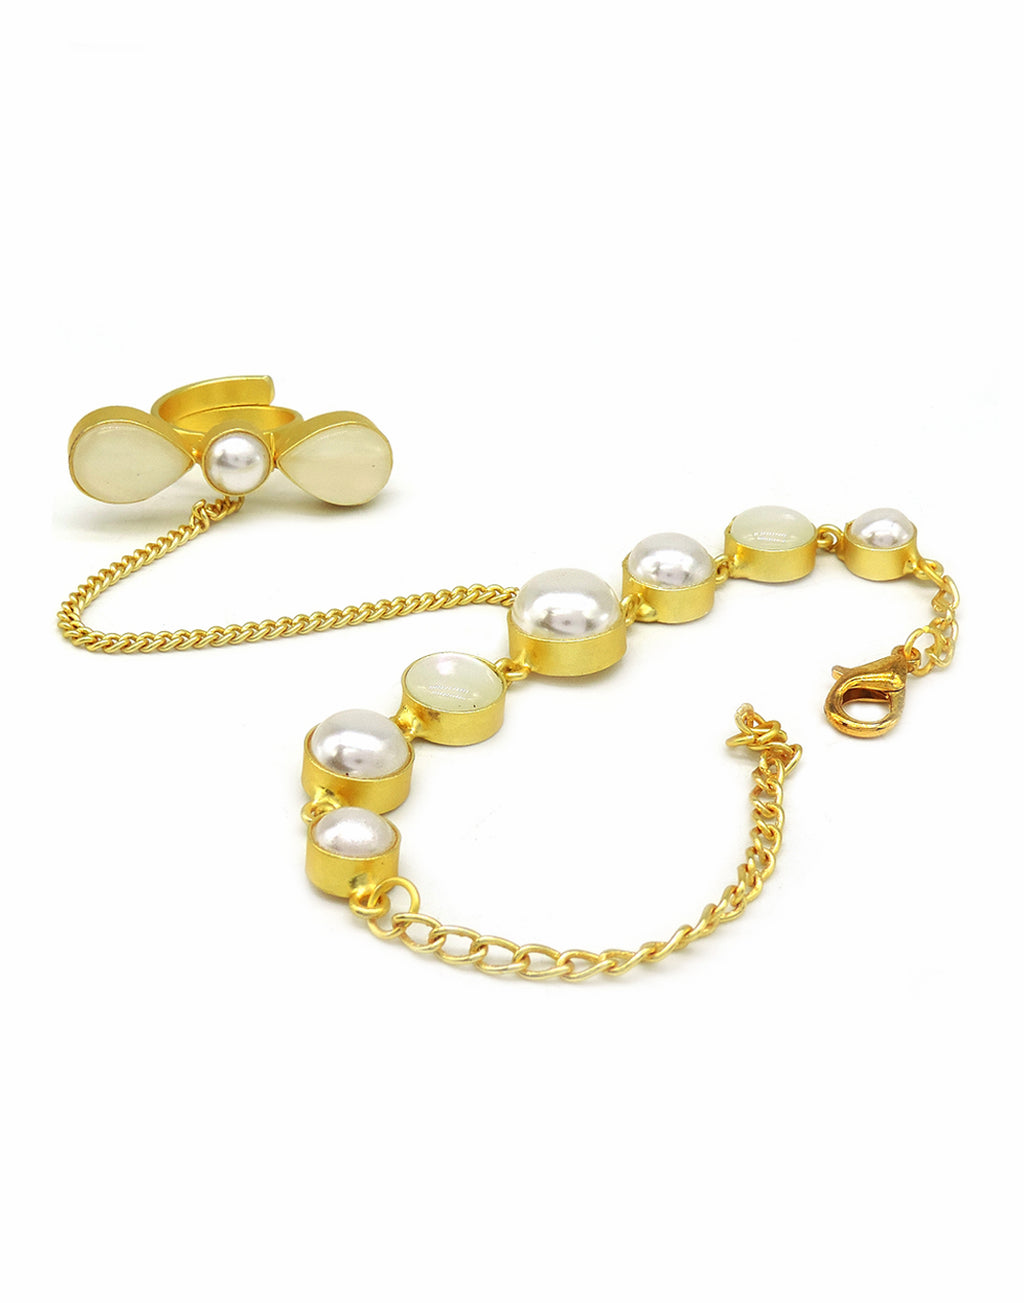 Kella Hand Harness - Statement Hand Harness - Gold-Plated & Hypoallergenic Jewellery - Made in India - Dubai Jewellery - Dori